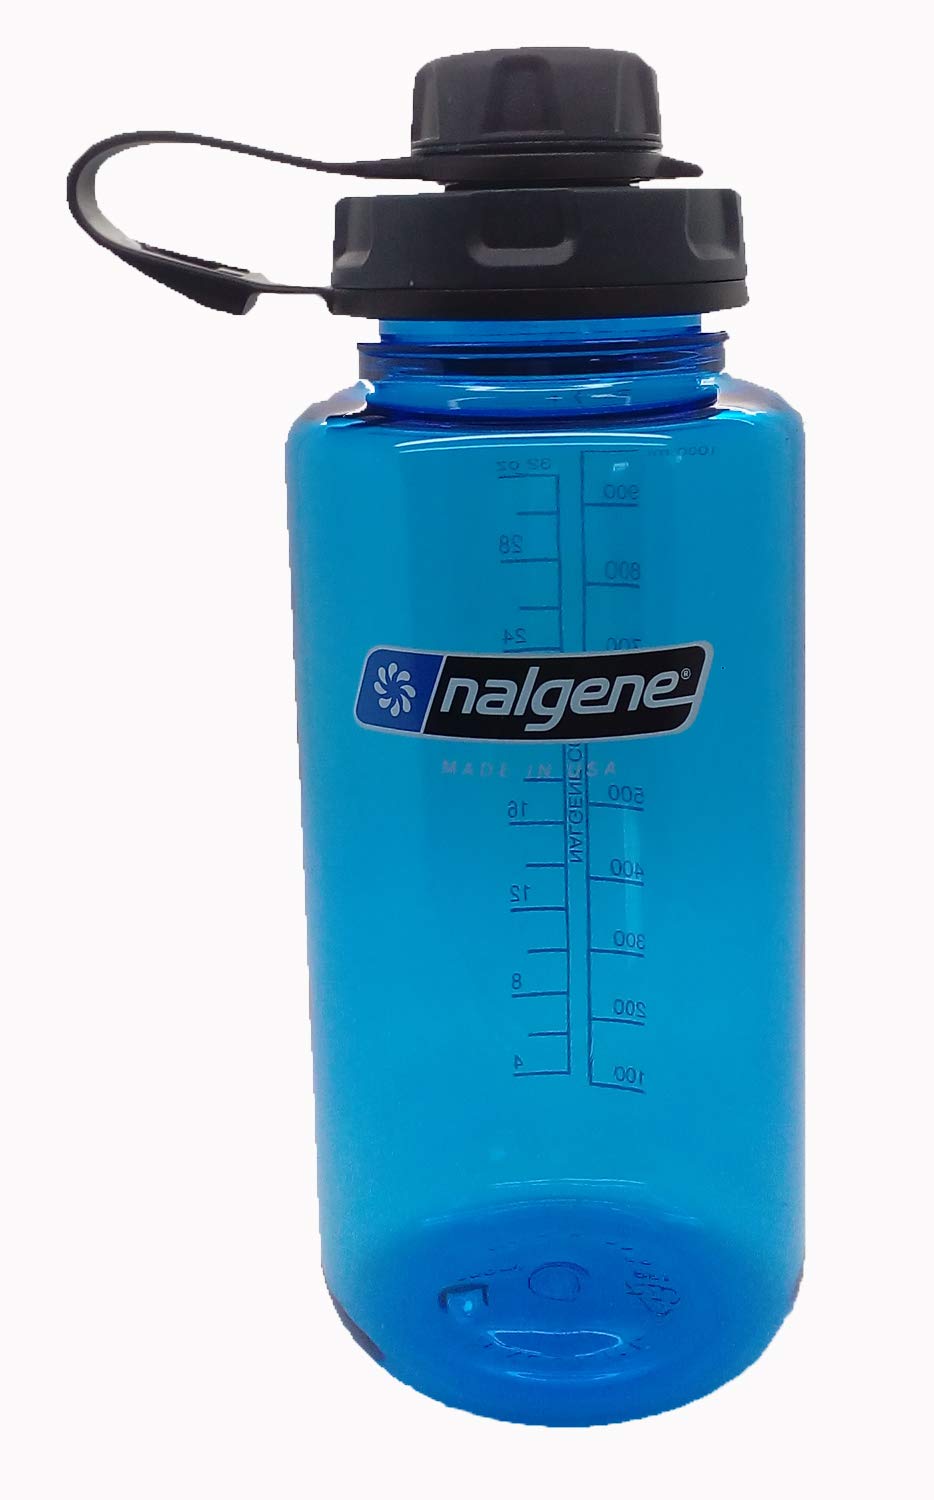 Nalgene Flasche 'Everyday Weithals' - 1 L, blau, capCAP'-schwarz